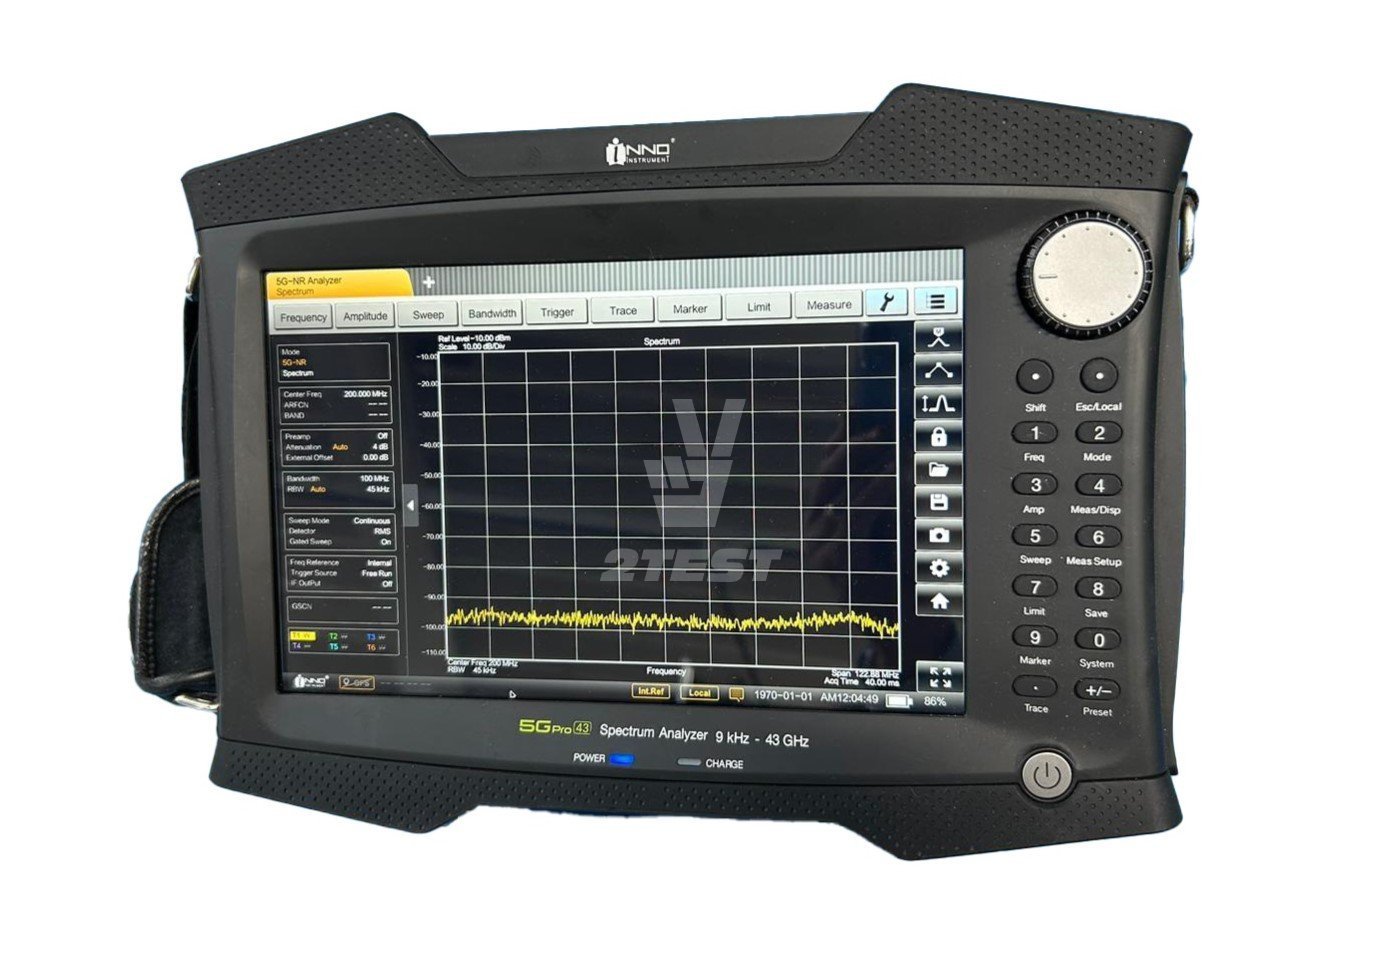 Решение 2TEST: Анализатор спектра INNO Instrument 5G PRO с диапазоном частот от 9 кГц до 43 ГГц